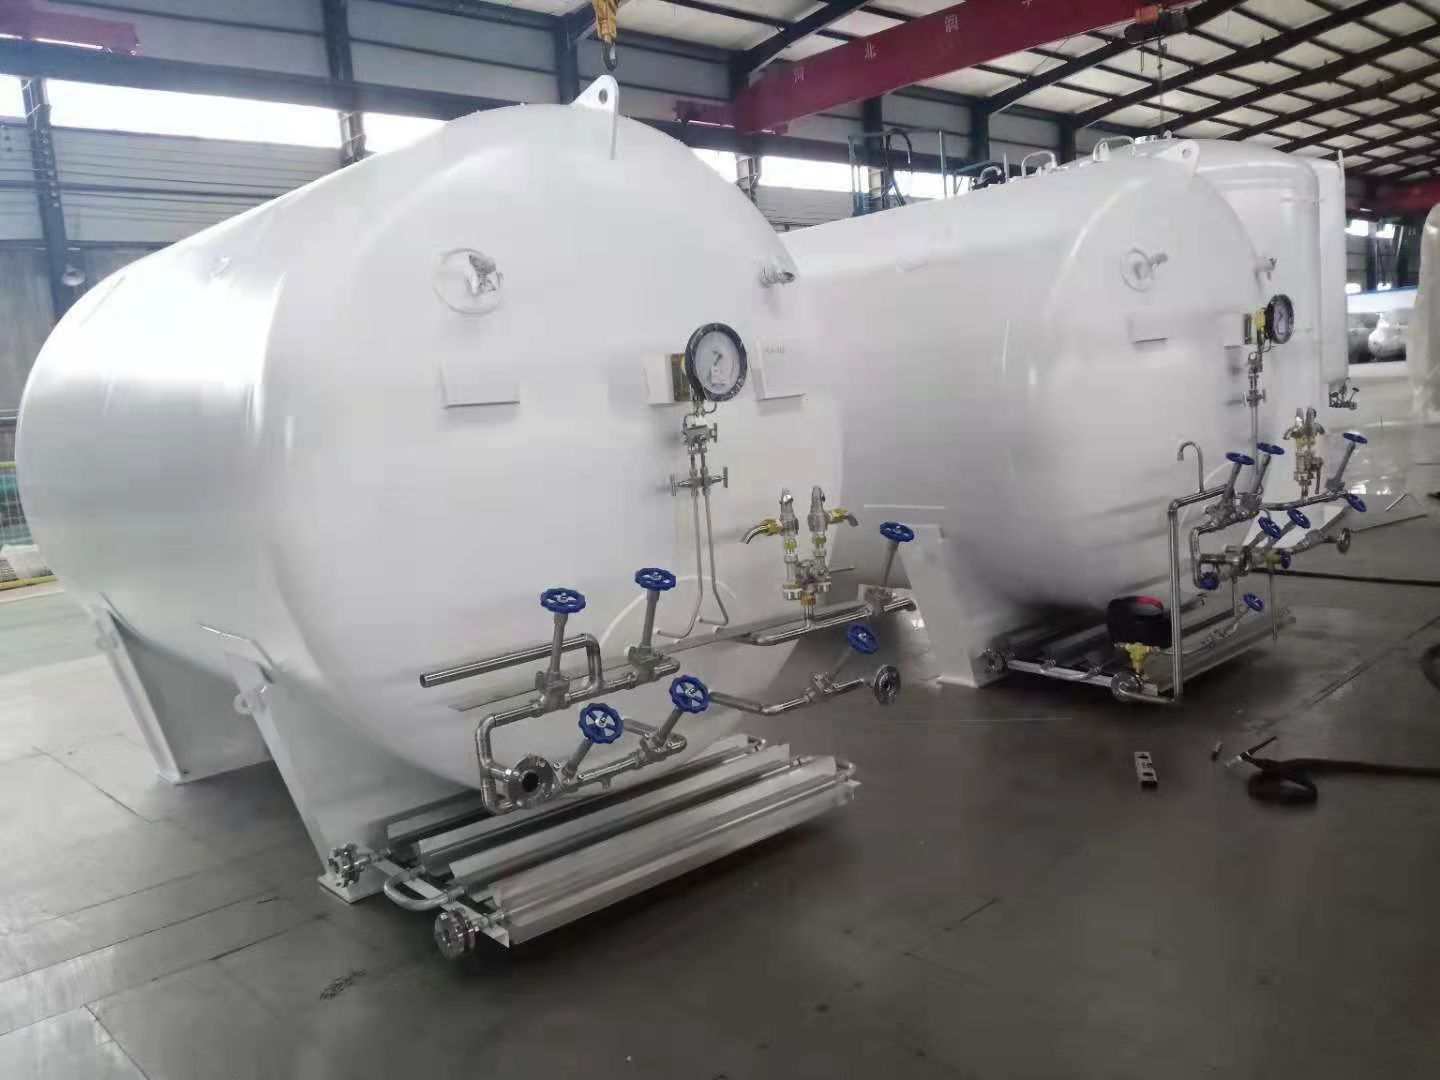 Description of oxygen, nitrogen and argon cryogenic storage tanks